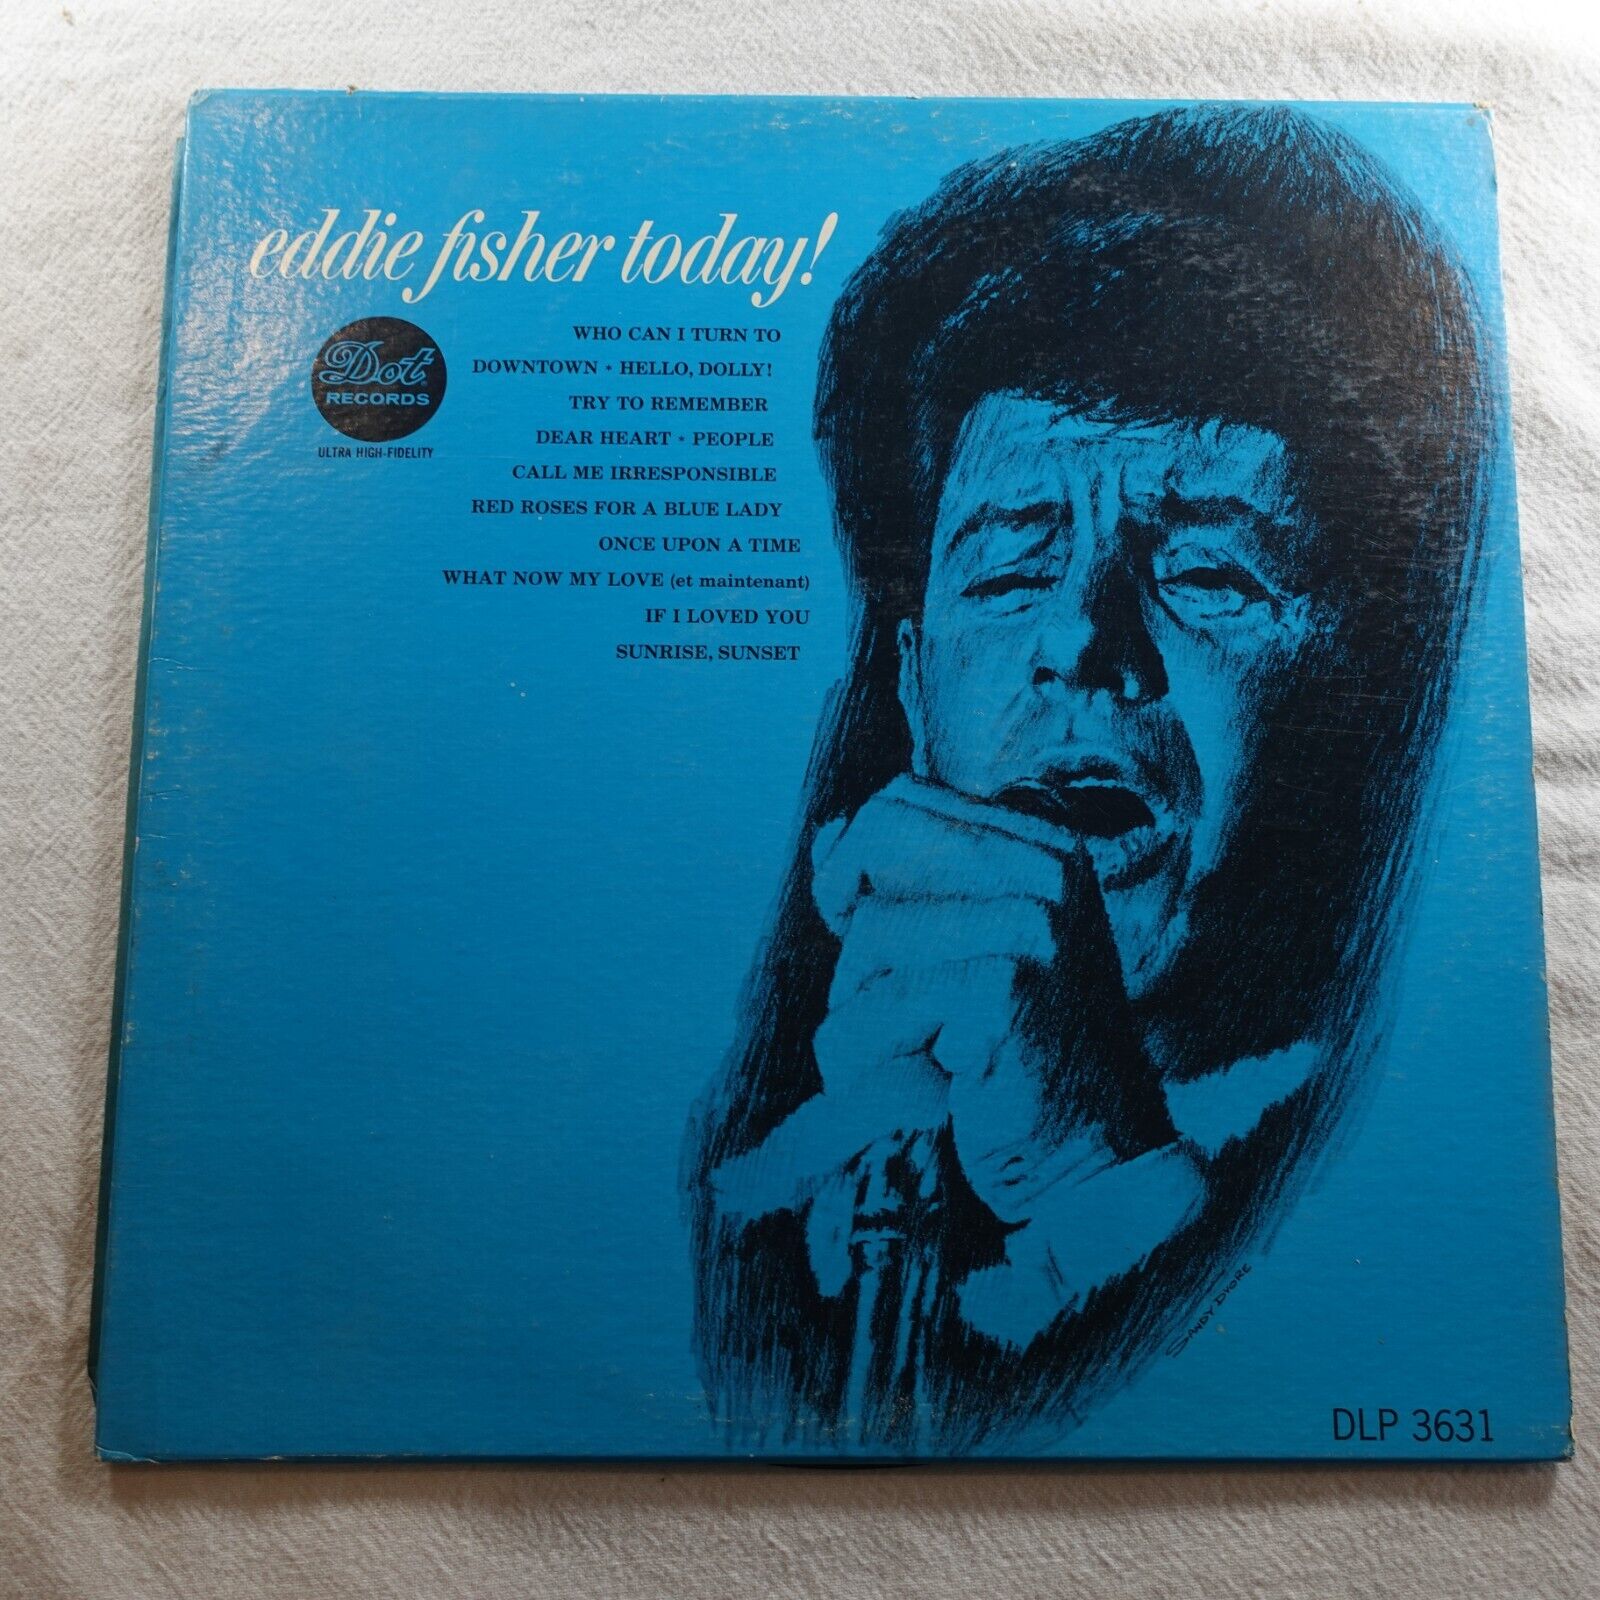 Eddie Fisher  Today   Record Album Vinyl LP